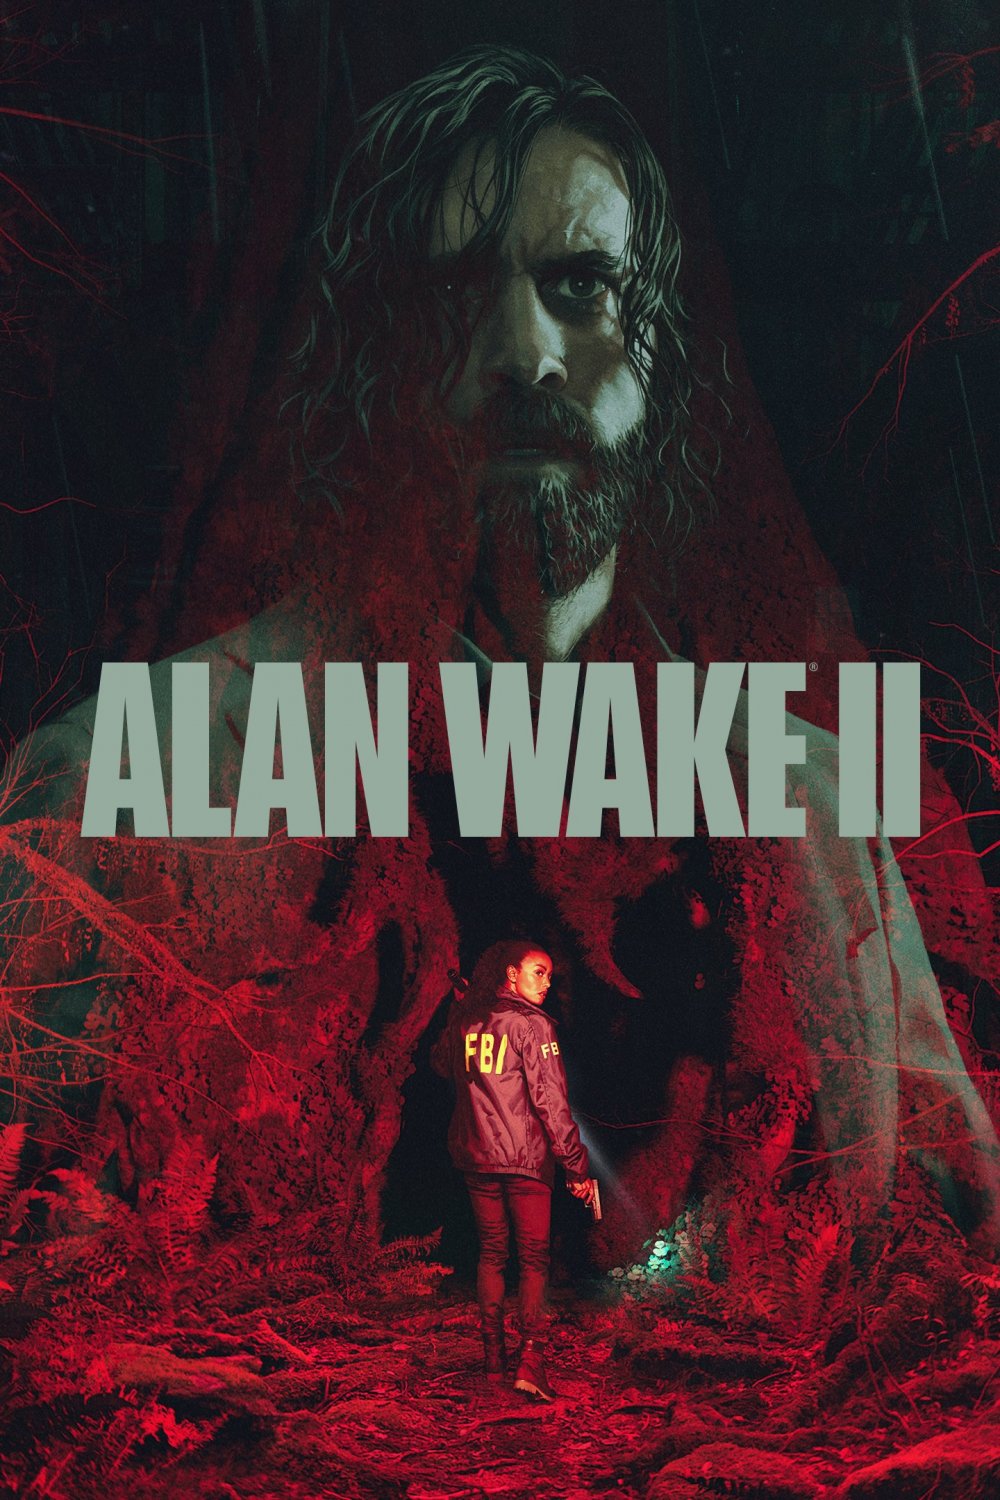 Alan Wake 2 18"x28" (45cm/70cm) Poster